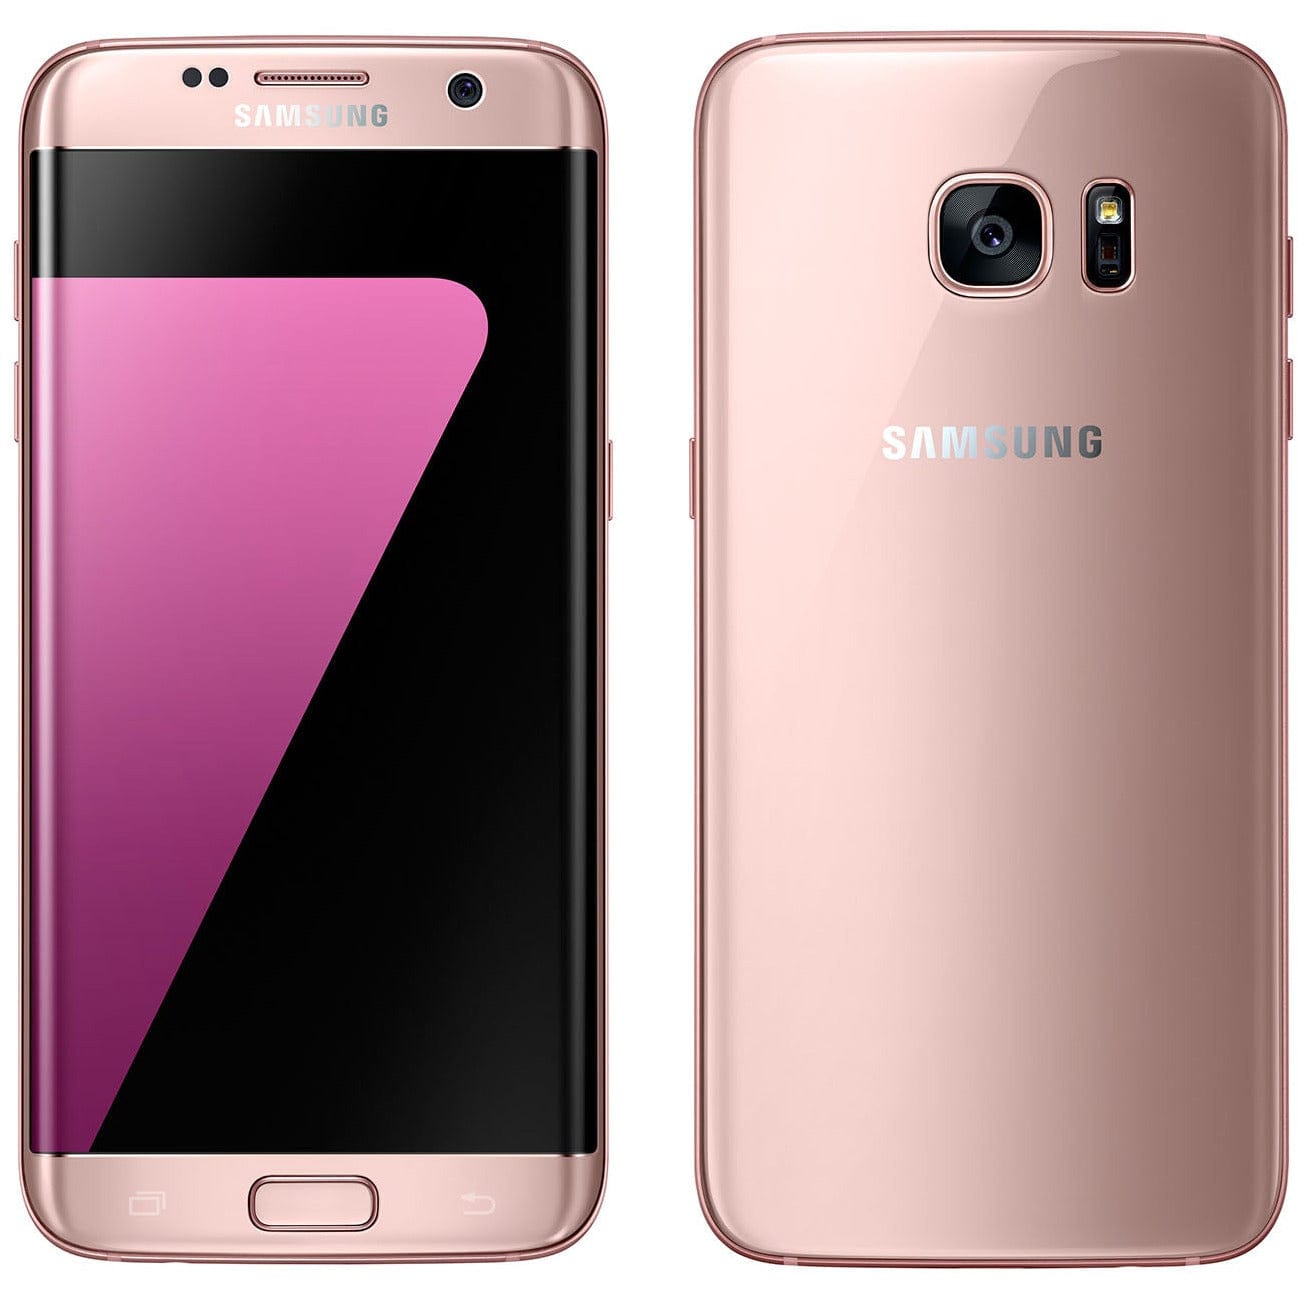 Samsung Galaxy S7 - 32 GB - Pink Gold - Unlocked - CDMA-GSM